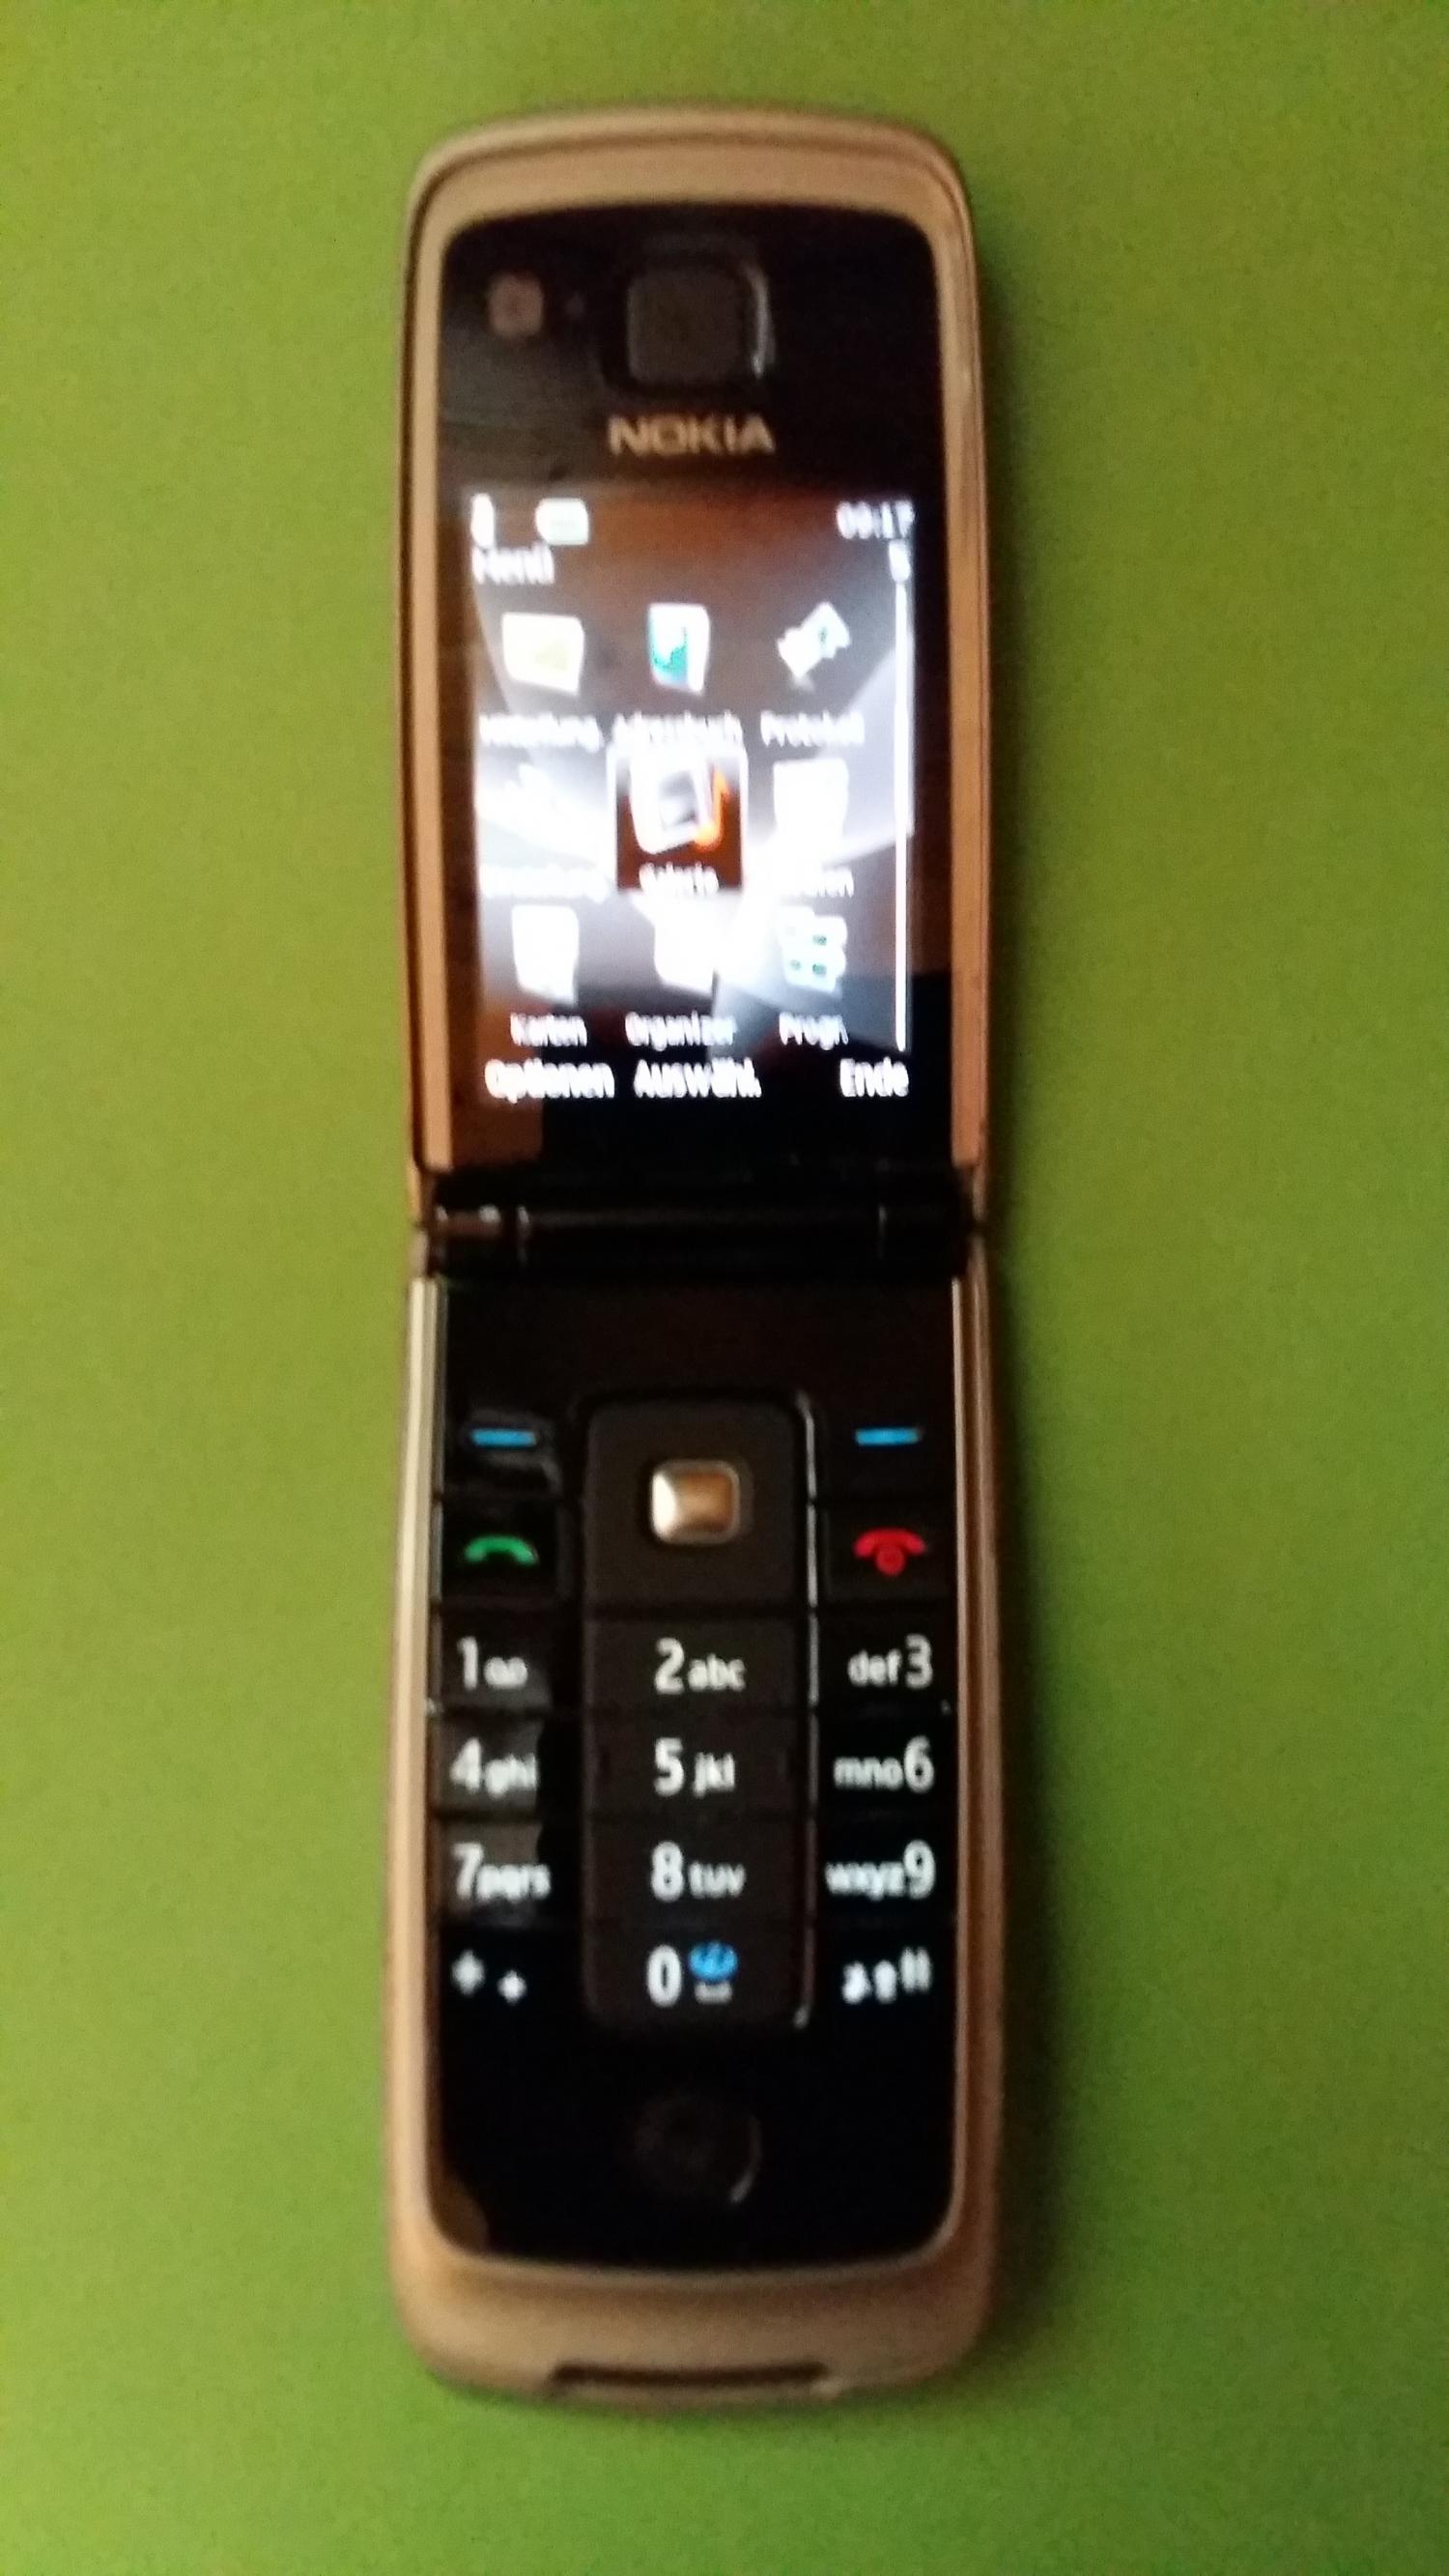 image-7333549-Nokia 6600F-1 Fold (5)2.jpg